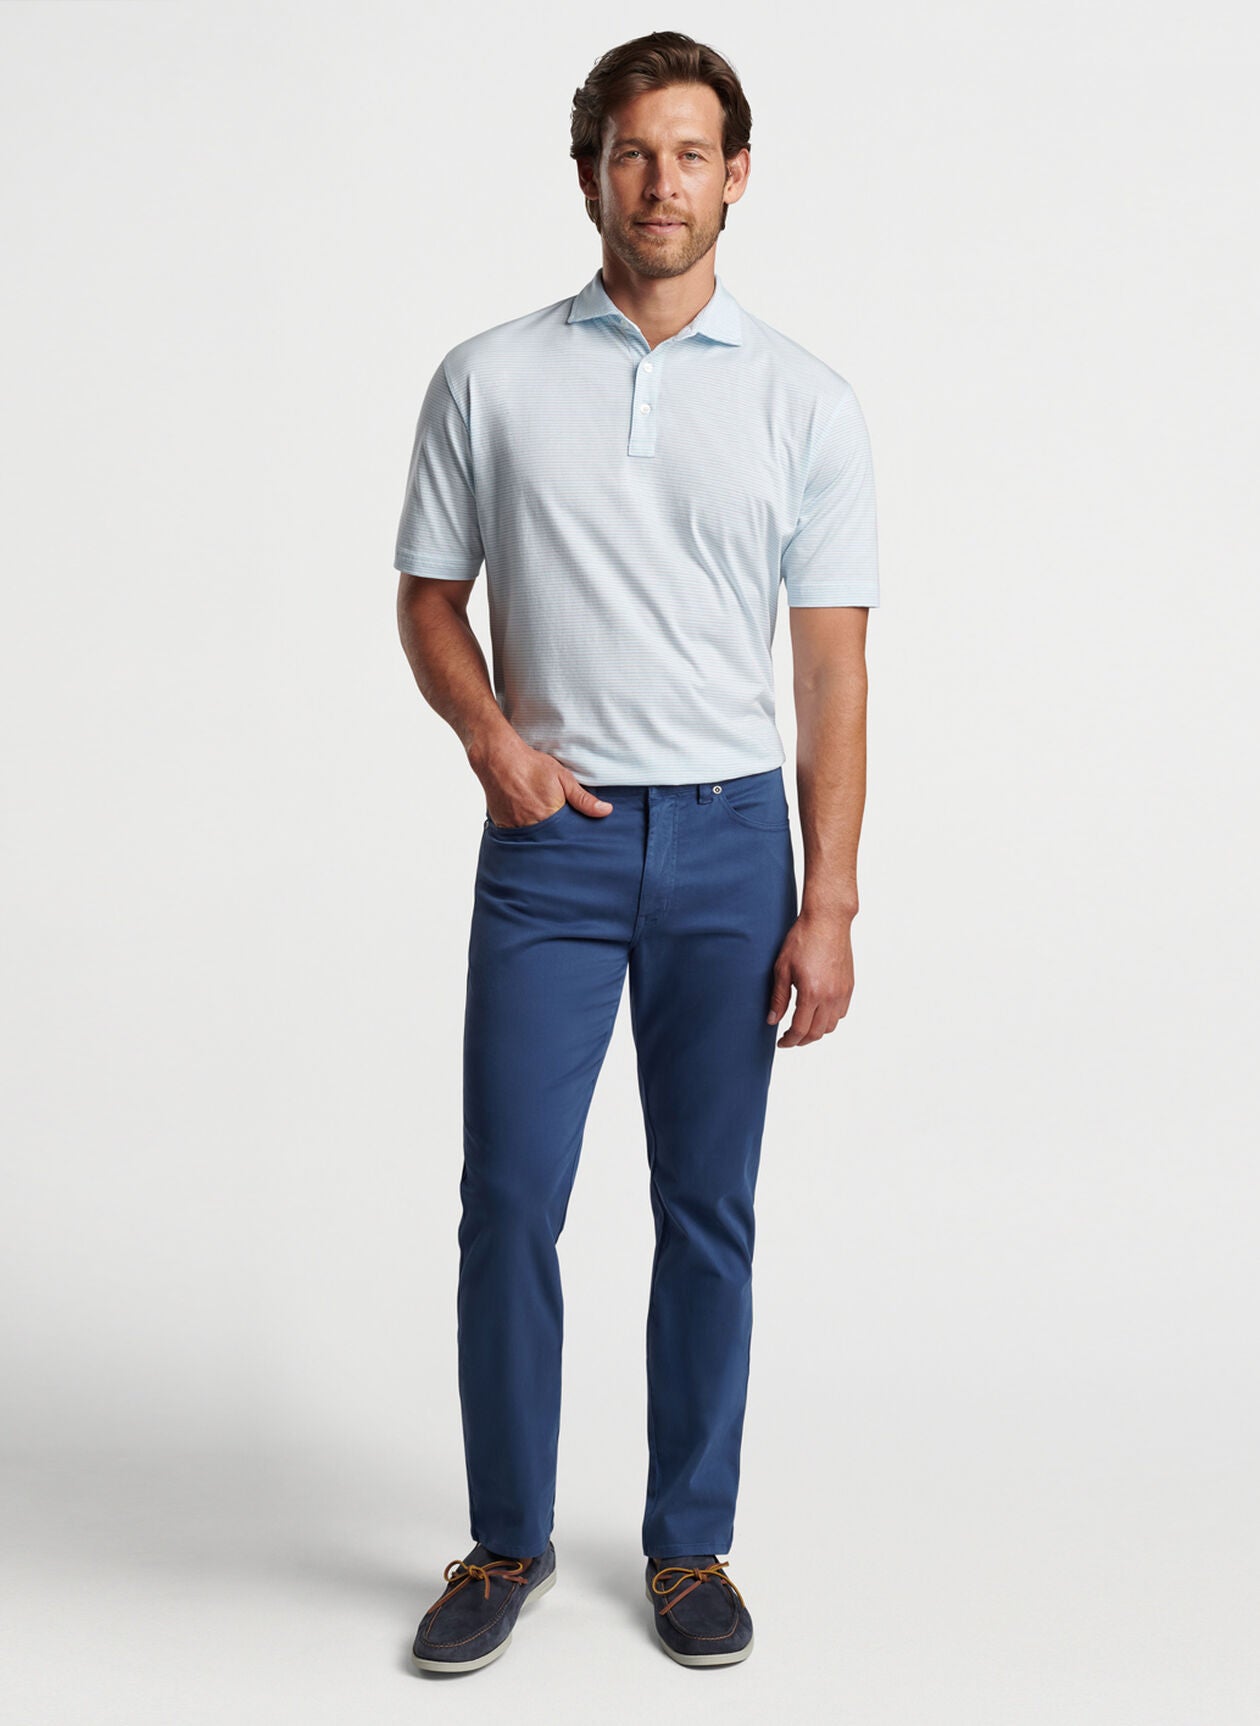 PETER MILLAR Men's Polo COTTAGE BLUE / M Peter Millar Crown Comfort Cotton Polo Range Stripe || David's Clothing MS24K51CB